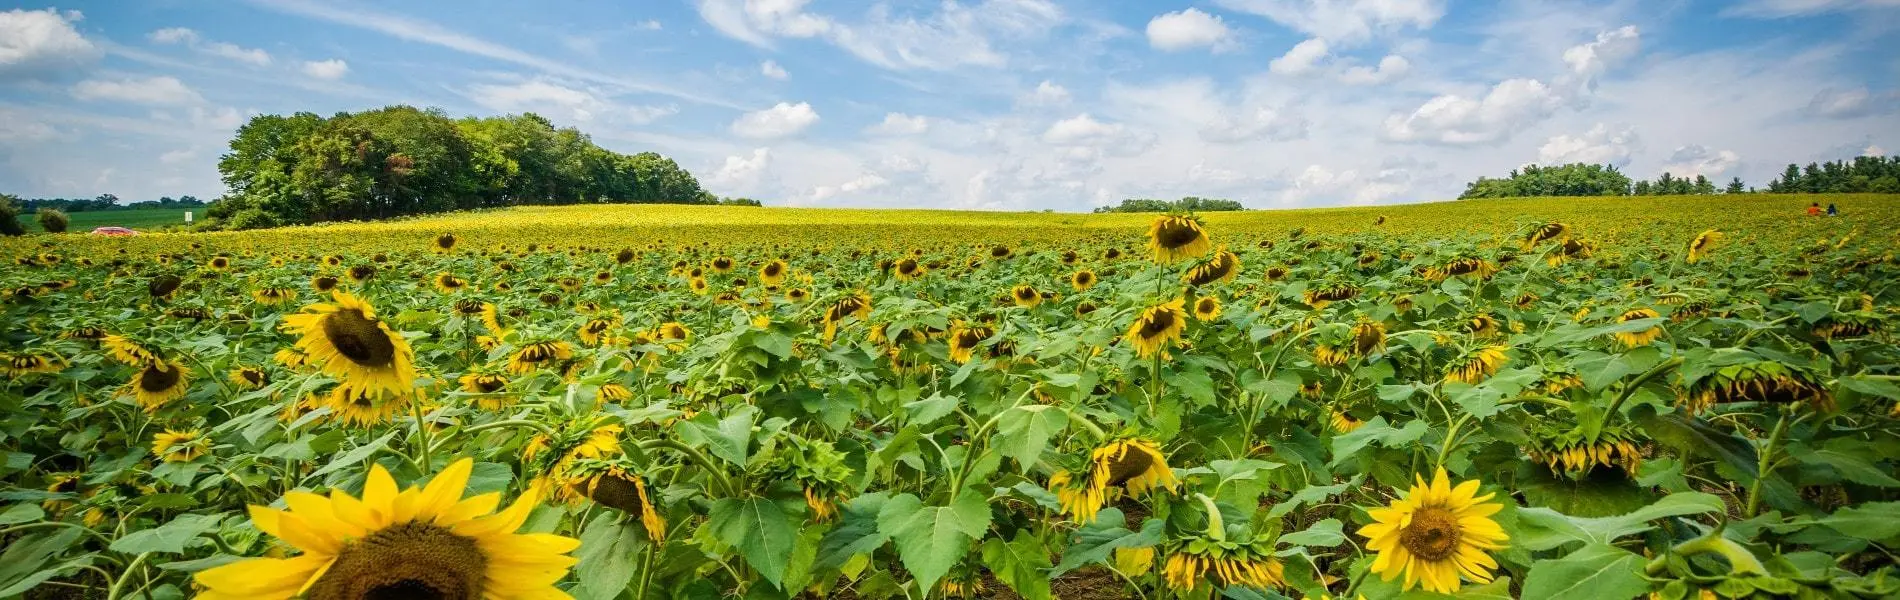 View of sunflower fields in Maryland near the neighborhood of Edgewater